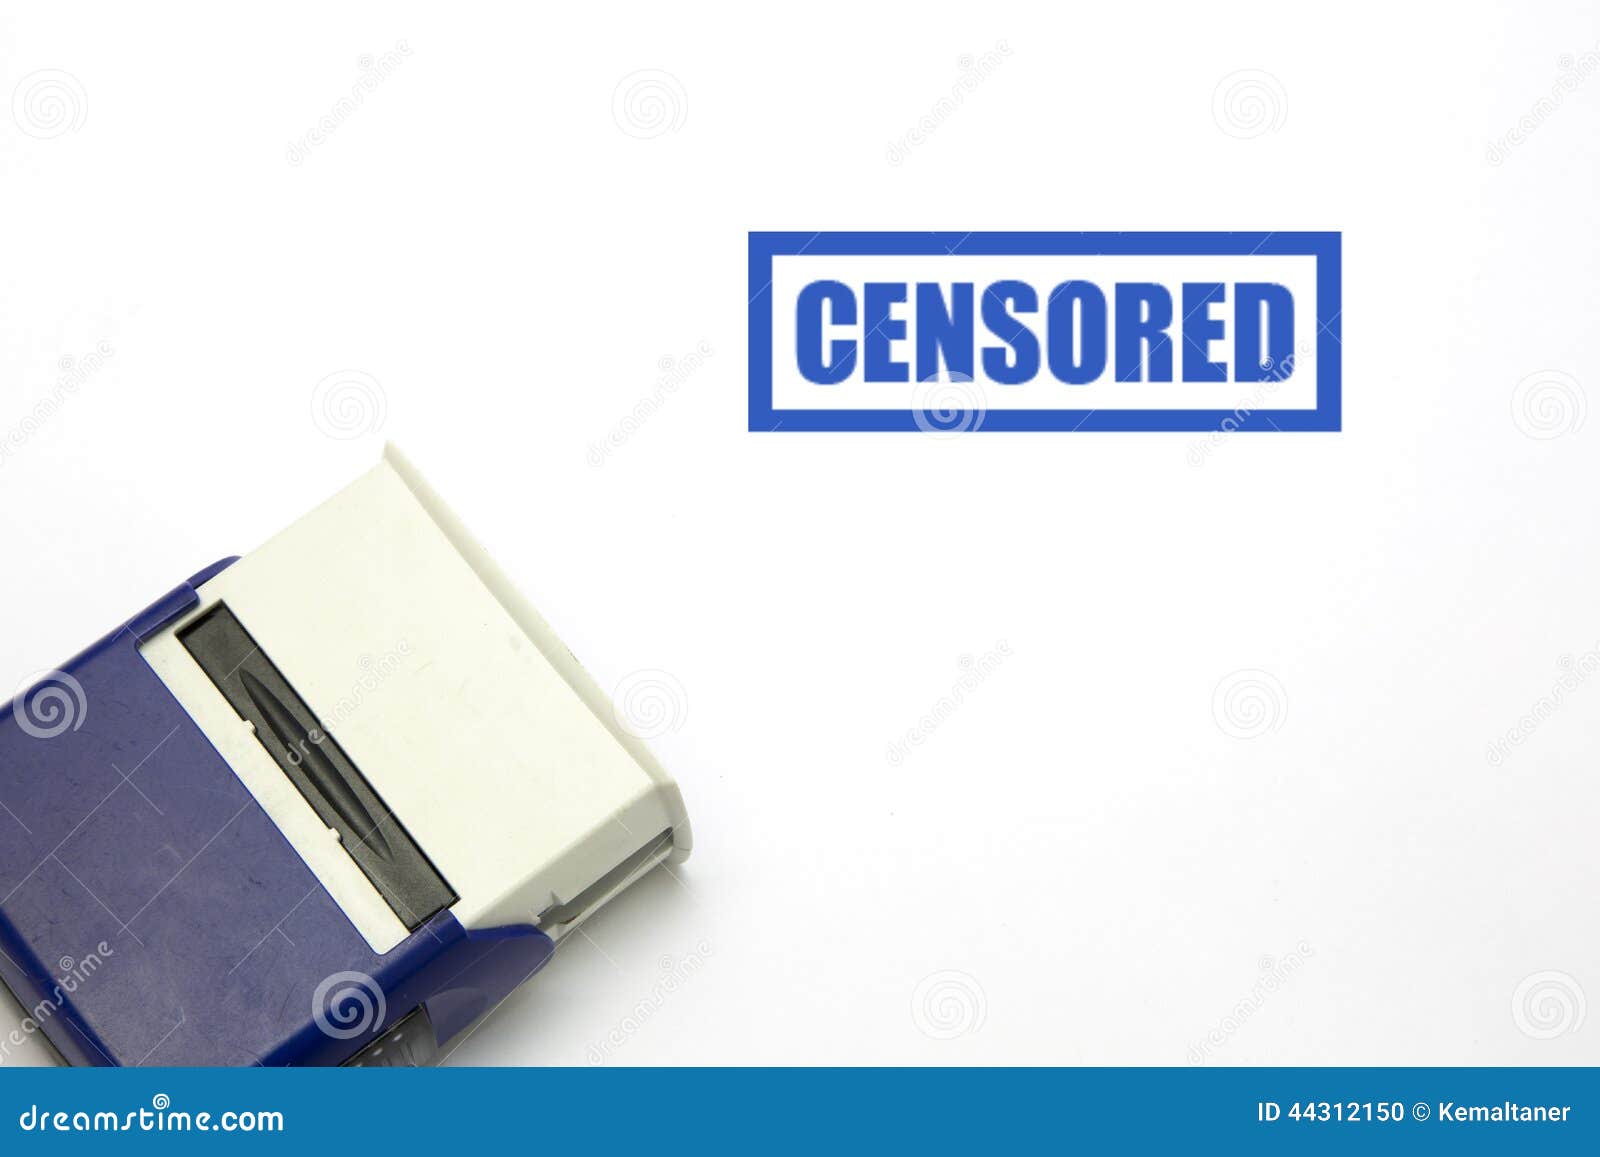 censored blue rubber stamp